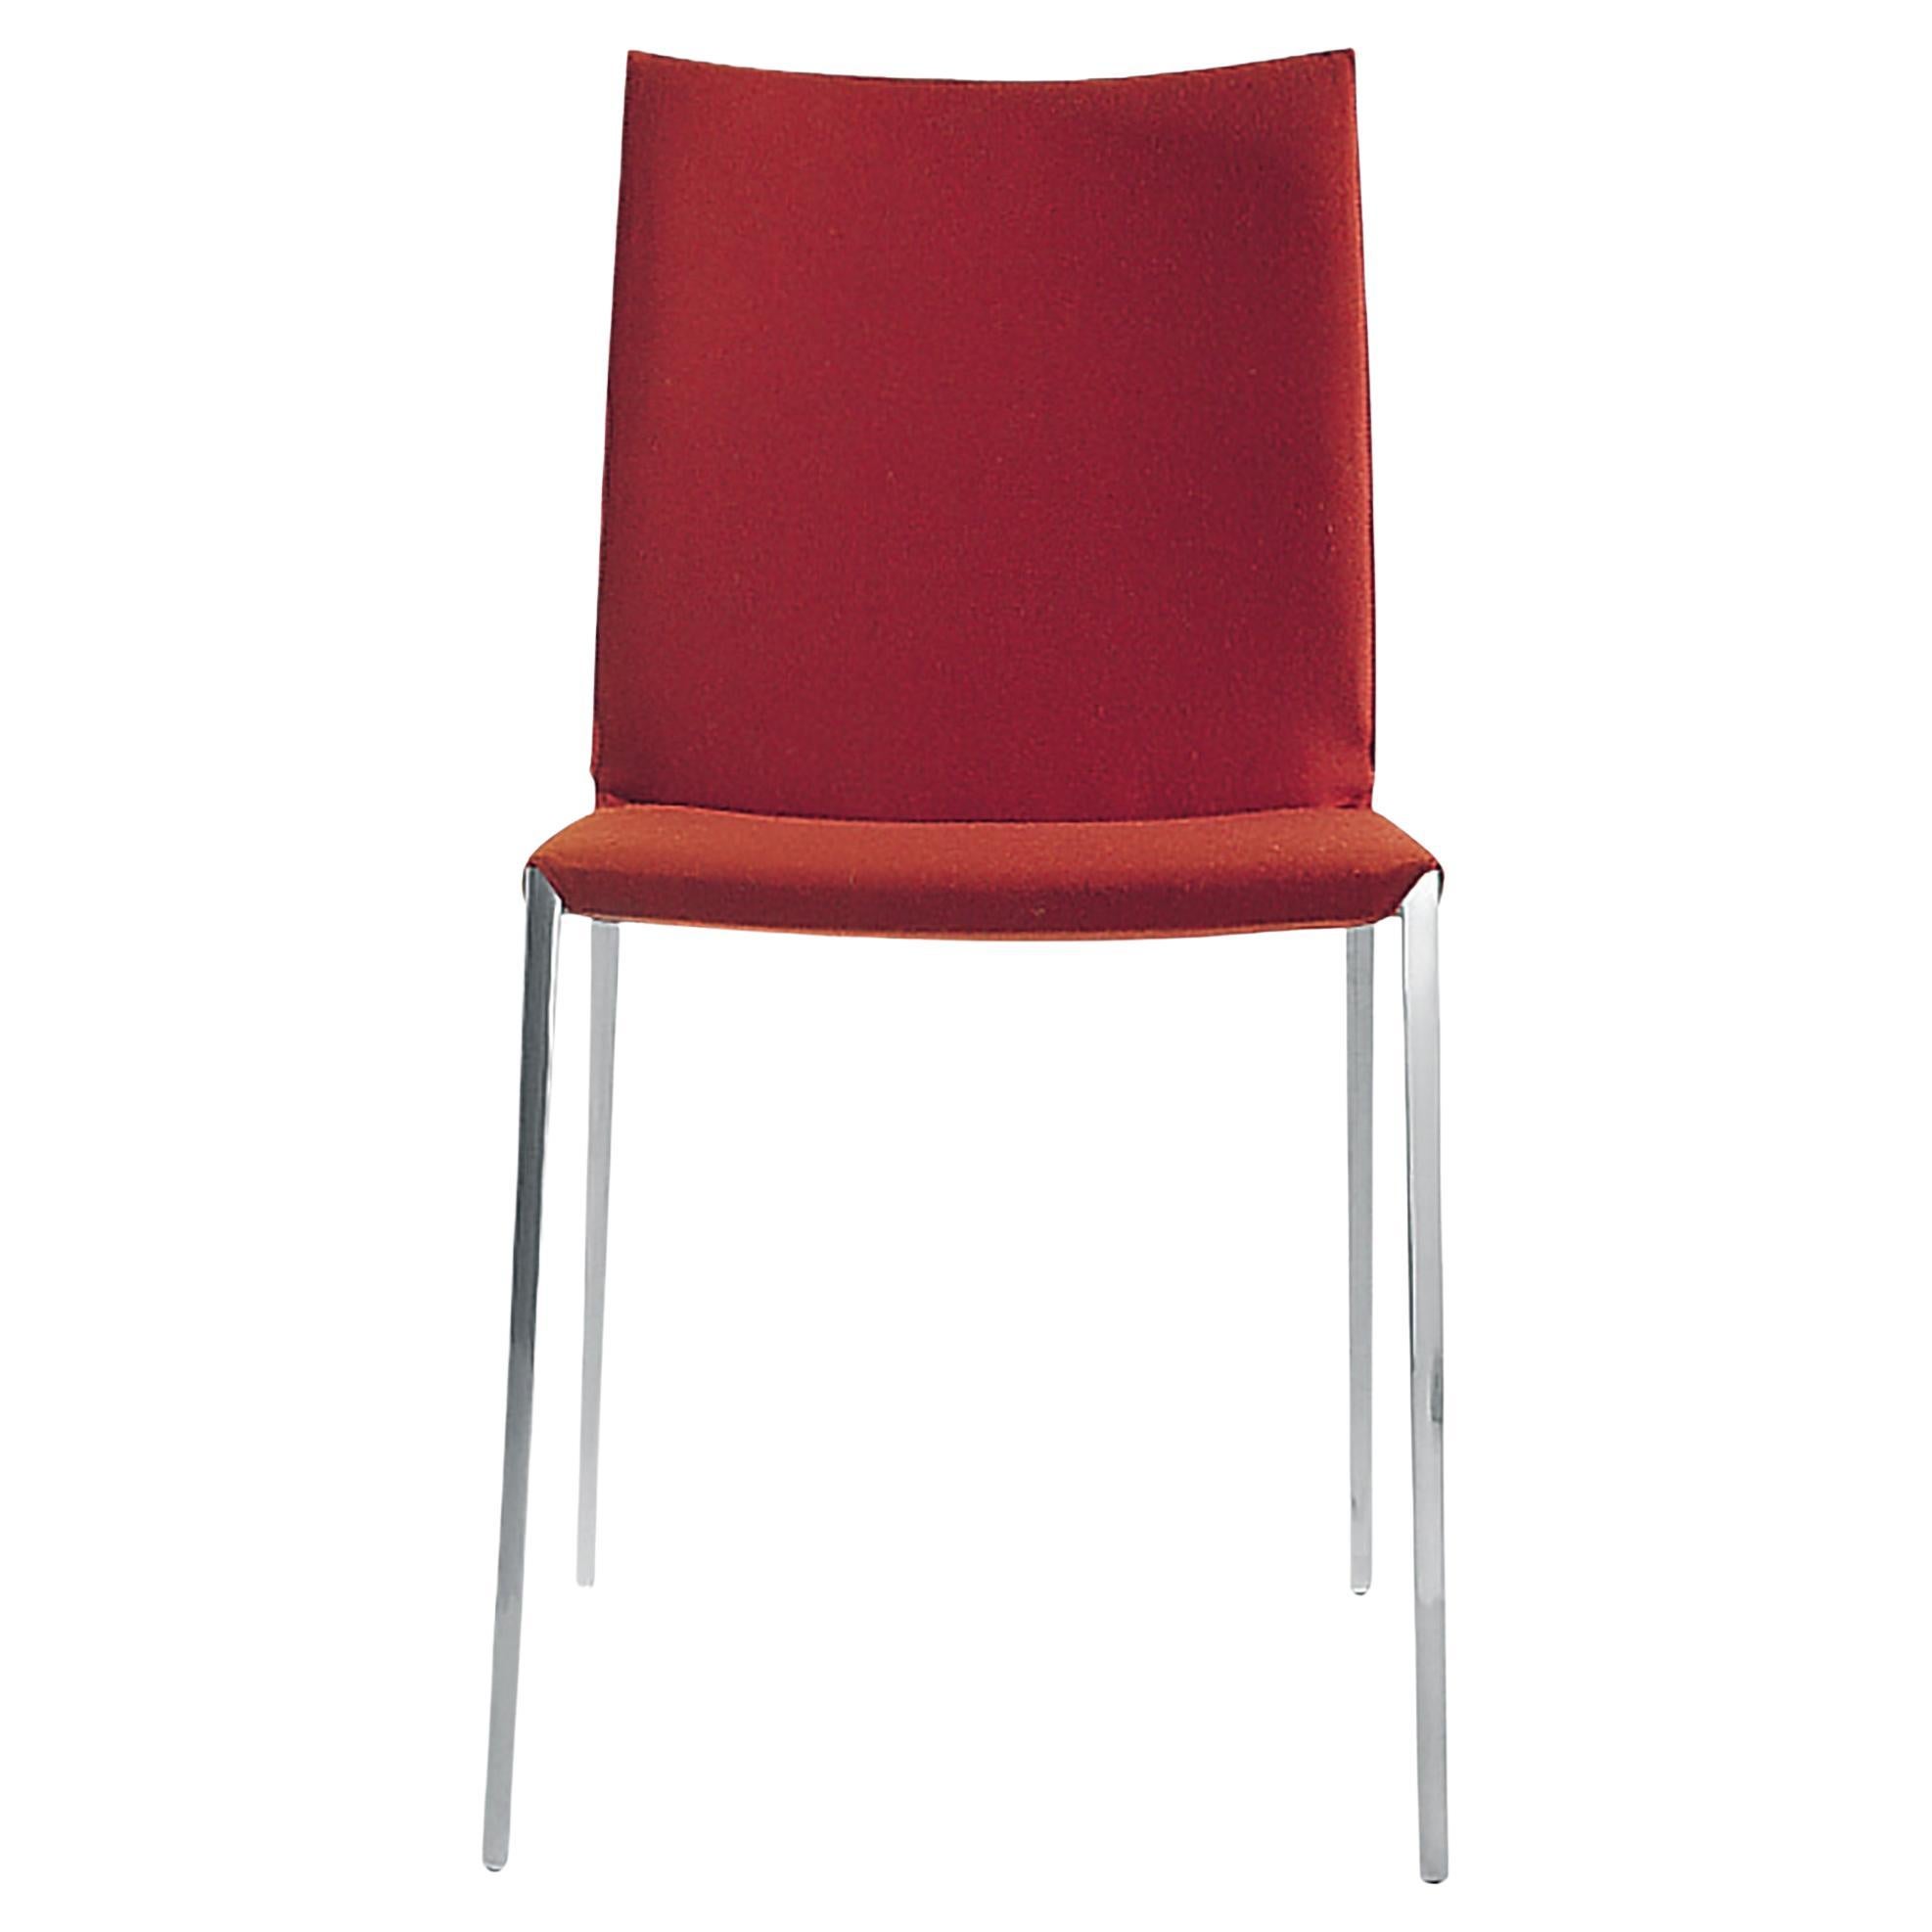 Zanotta Lia Stuhl aus rotem stoff mit rahmen aus poliertem aluminium by Roberto Barbieri